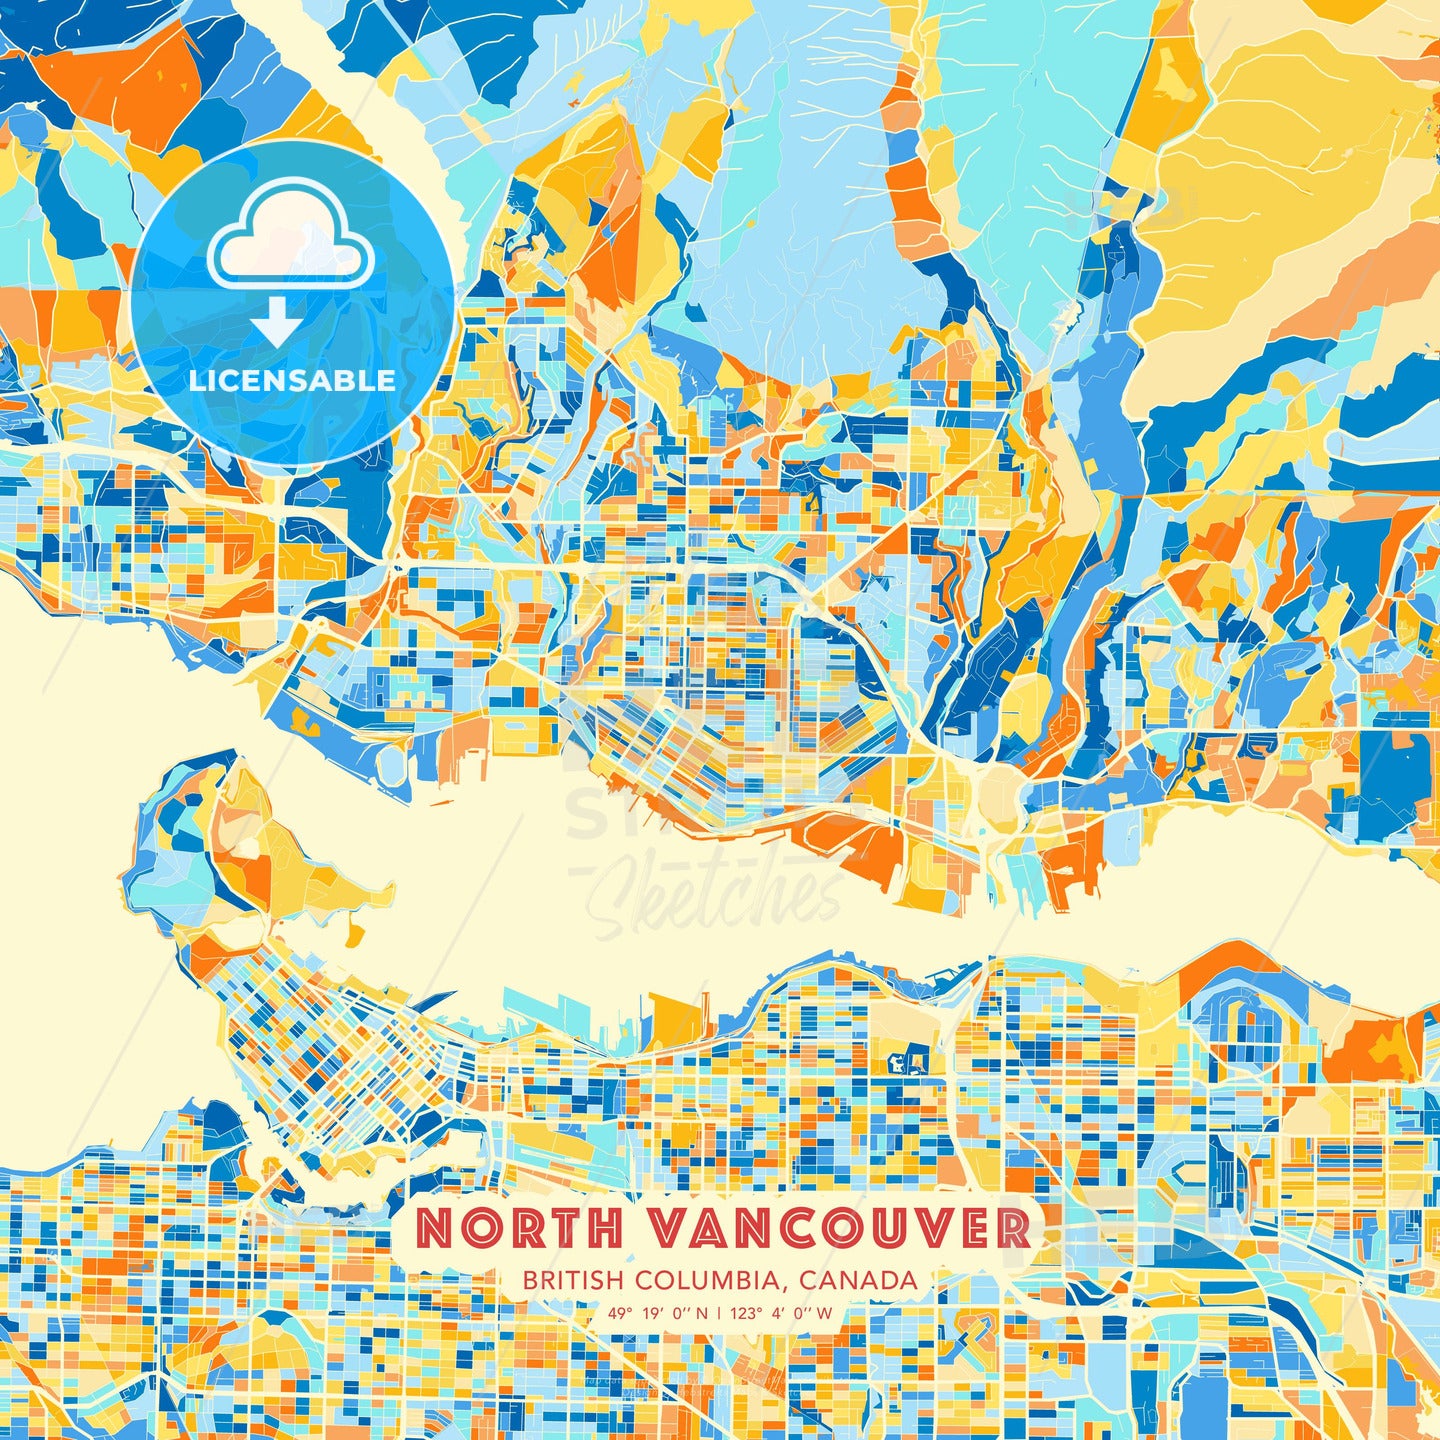 North Vancouver, British Columbia, Canada, map - HEBSTREITS Sketches